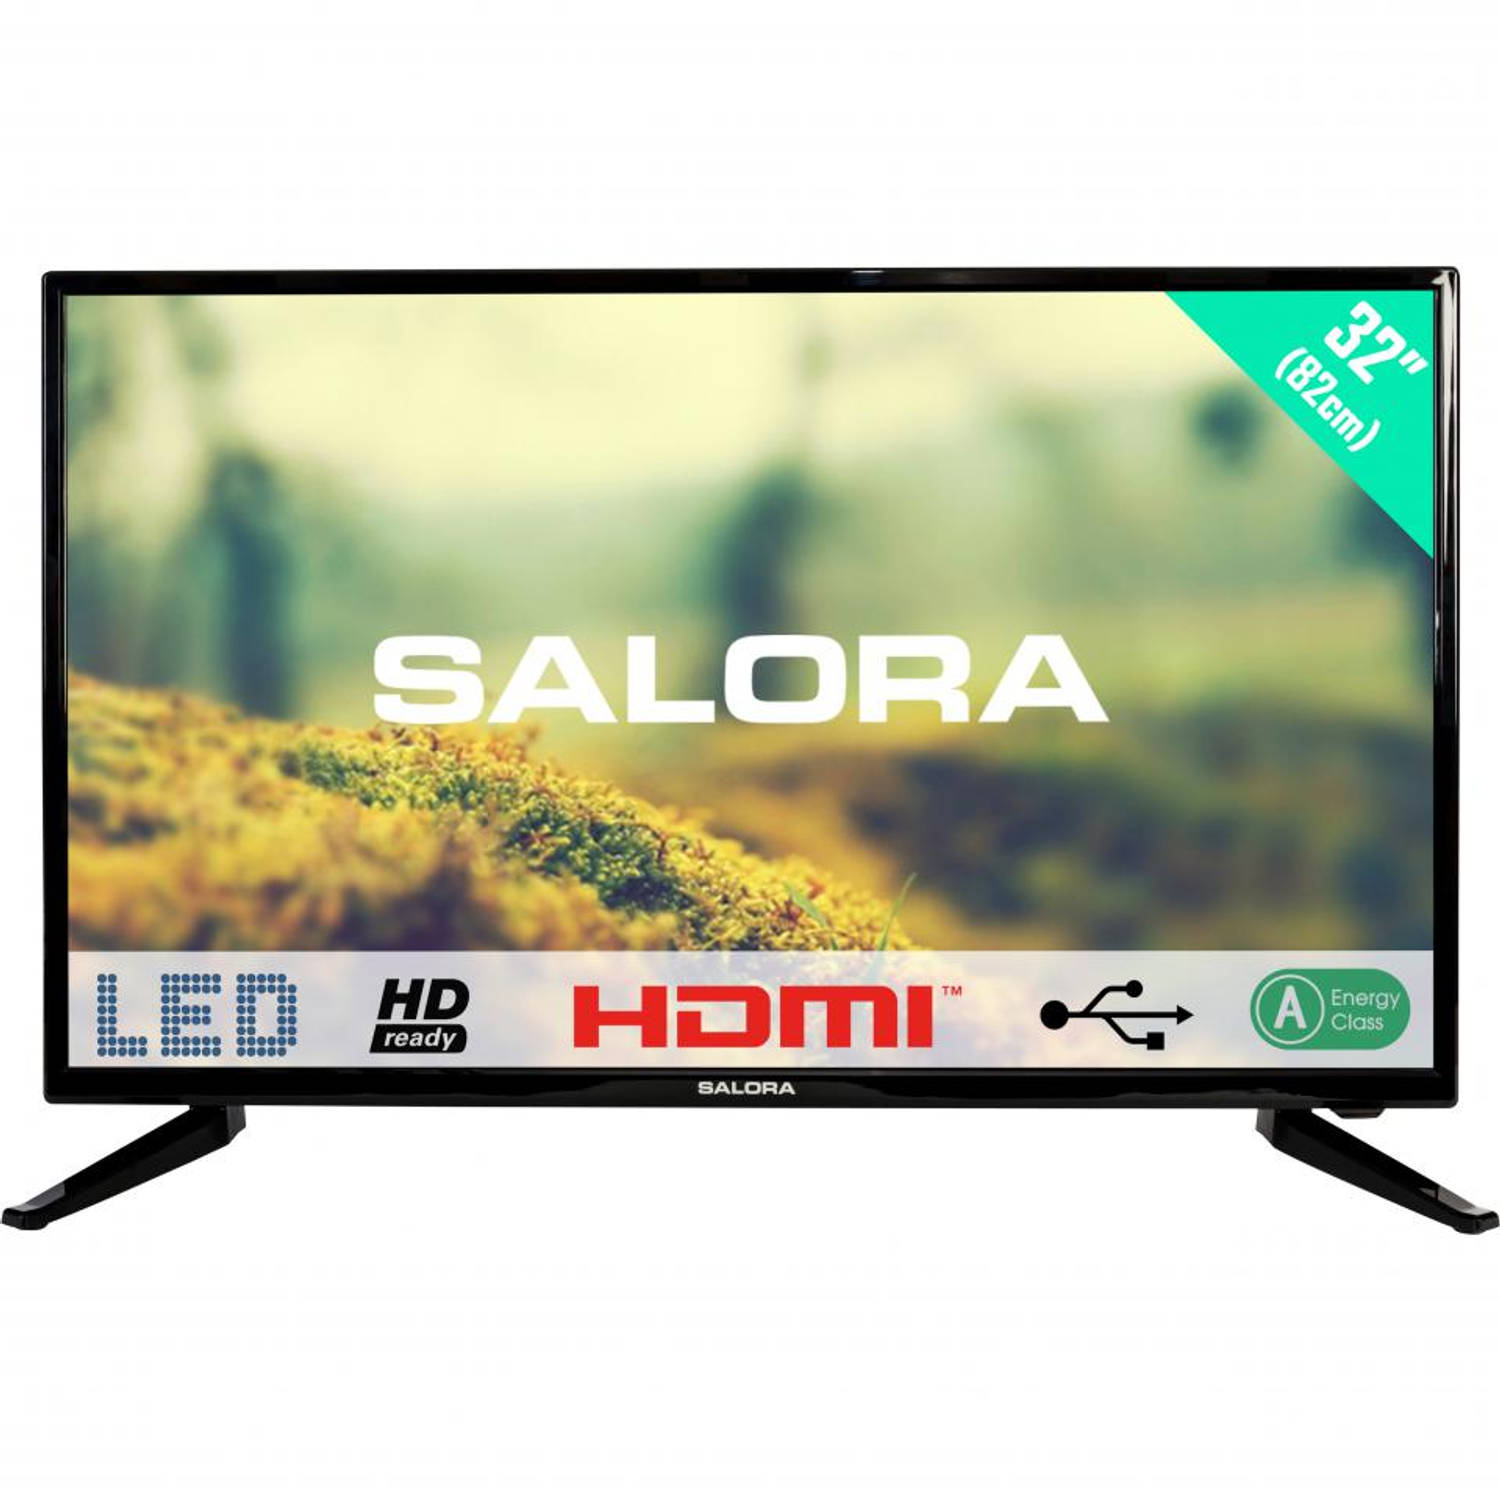 Salora led-televisie 32led1500 - 32 inch - hd led tv